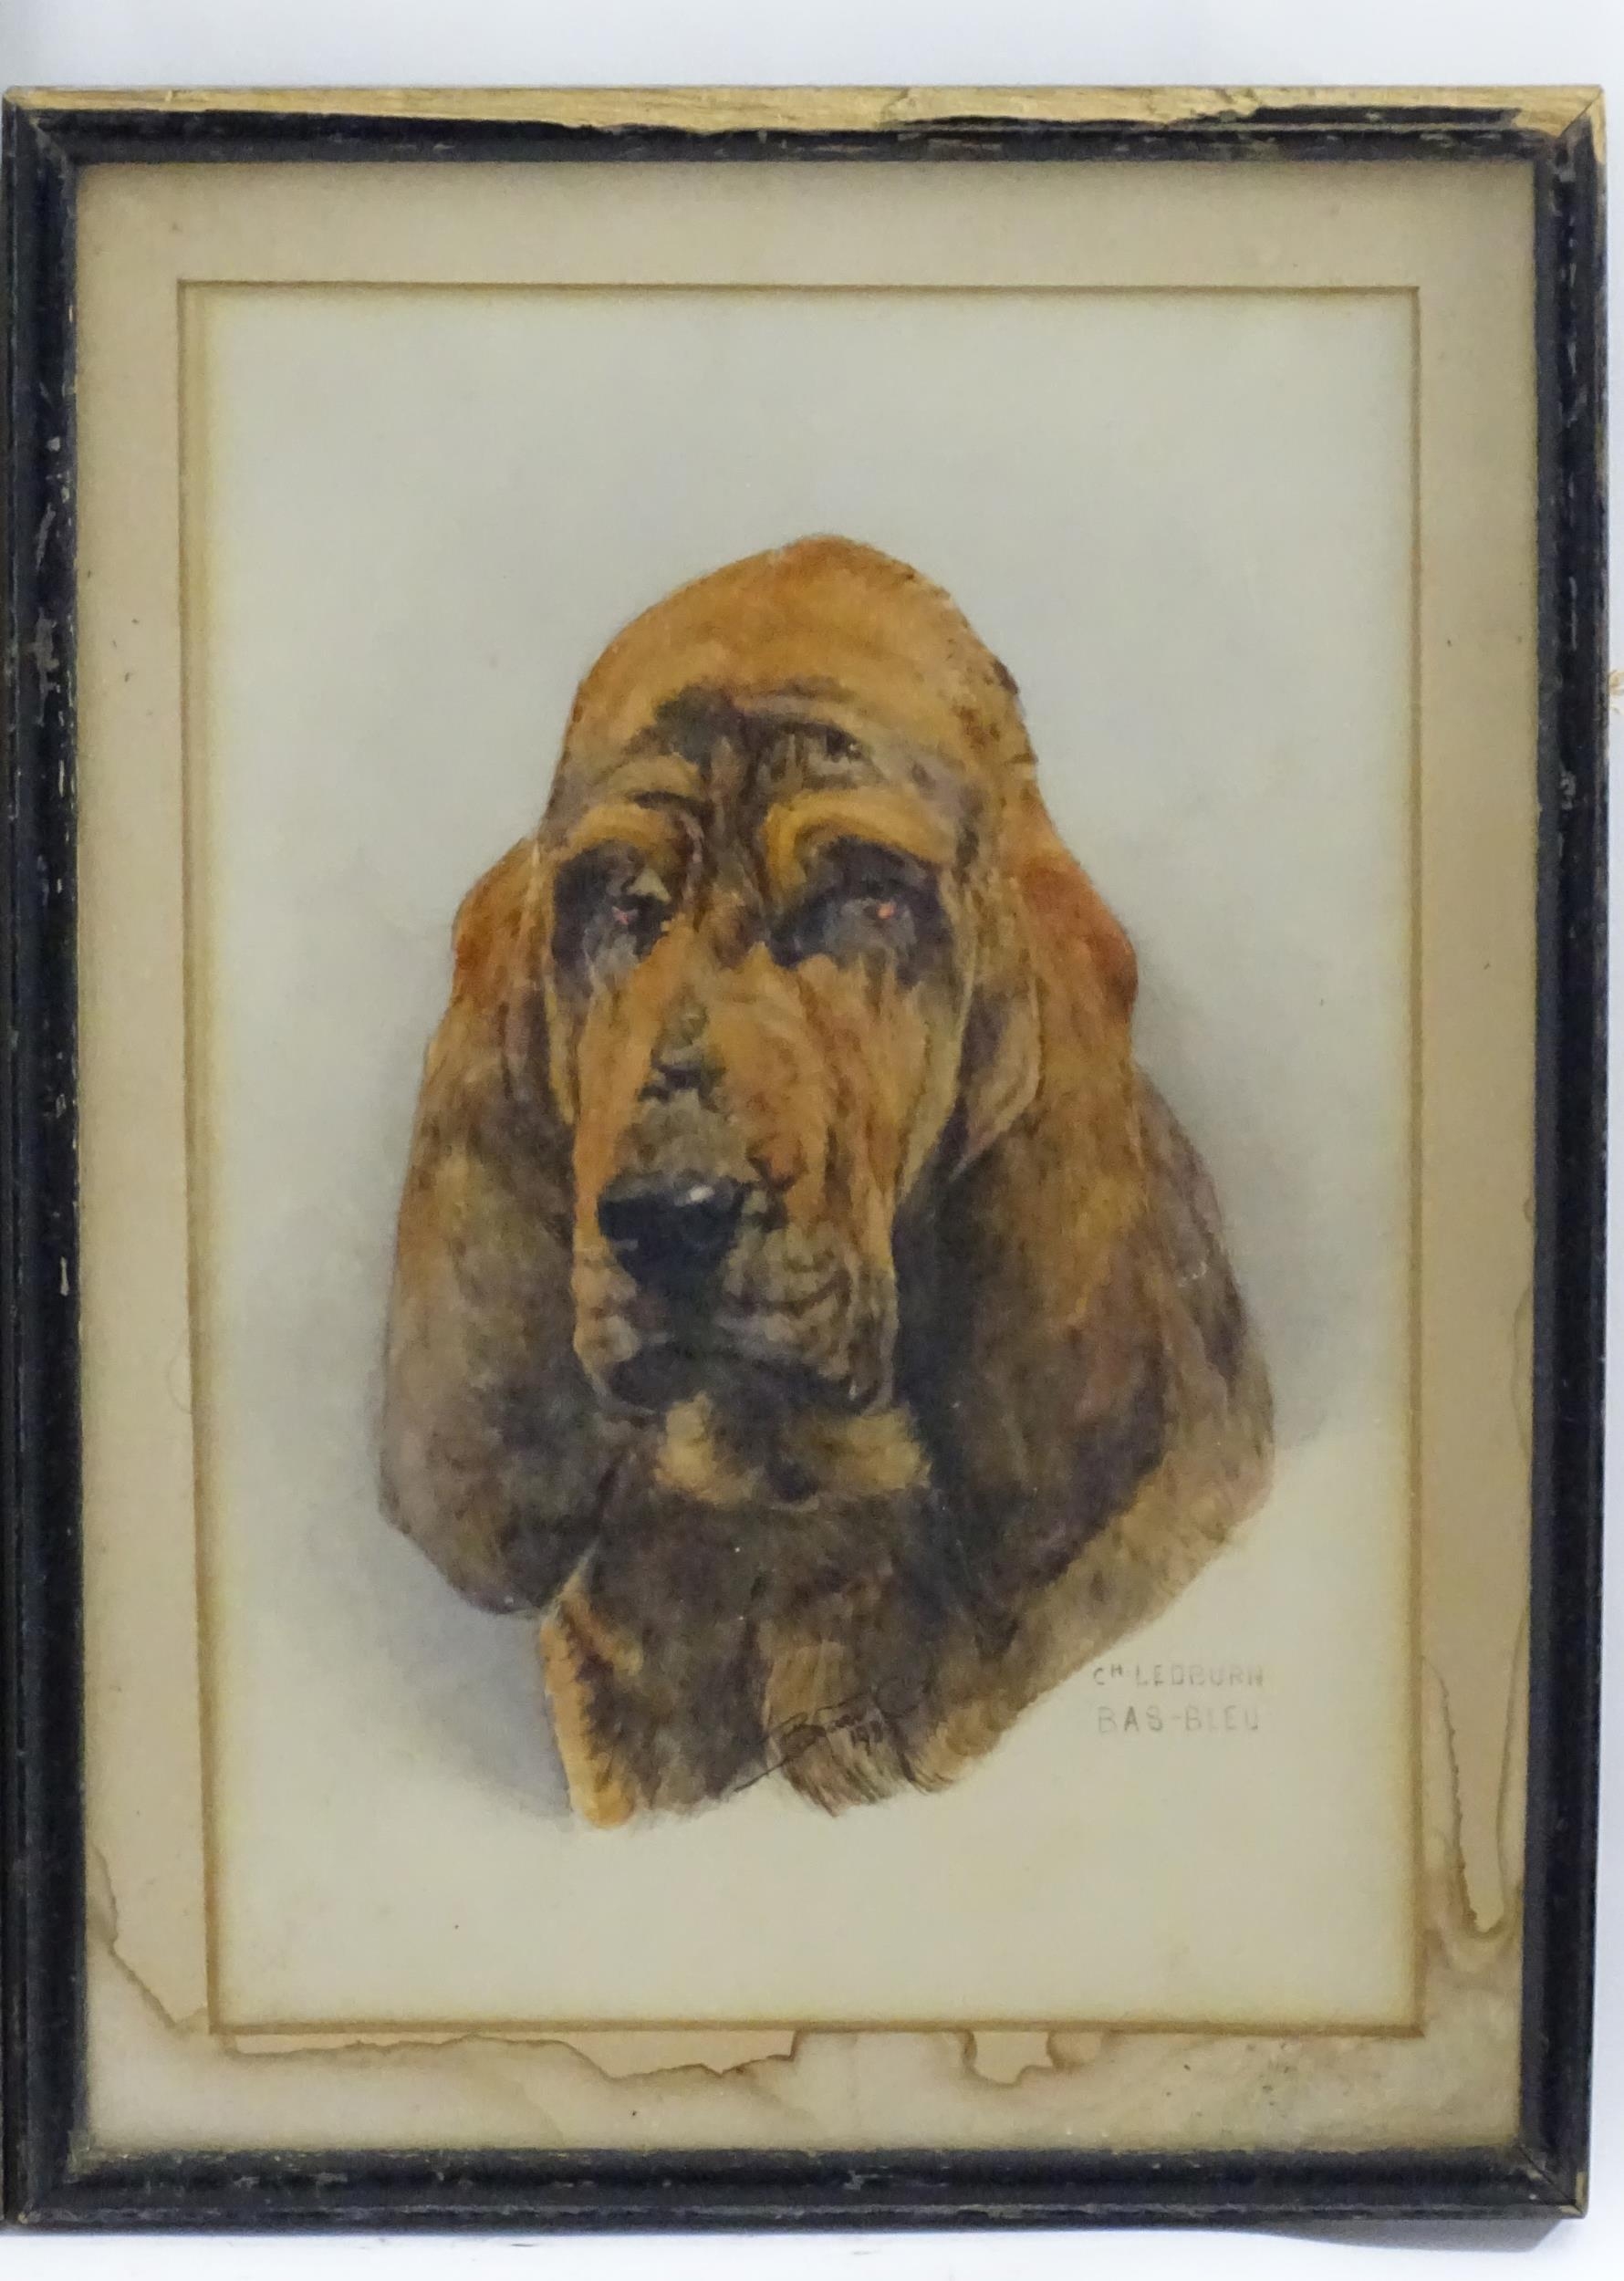 Bernard Colls, 20th century, Watercolour, Ch. Ledburn Bas-Bleu, A portrait of a Bloodhound dog. - Image 3 of 6